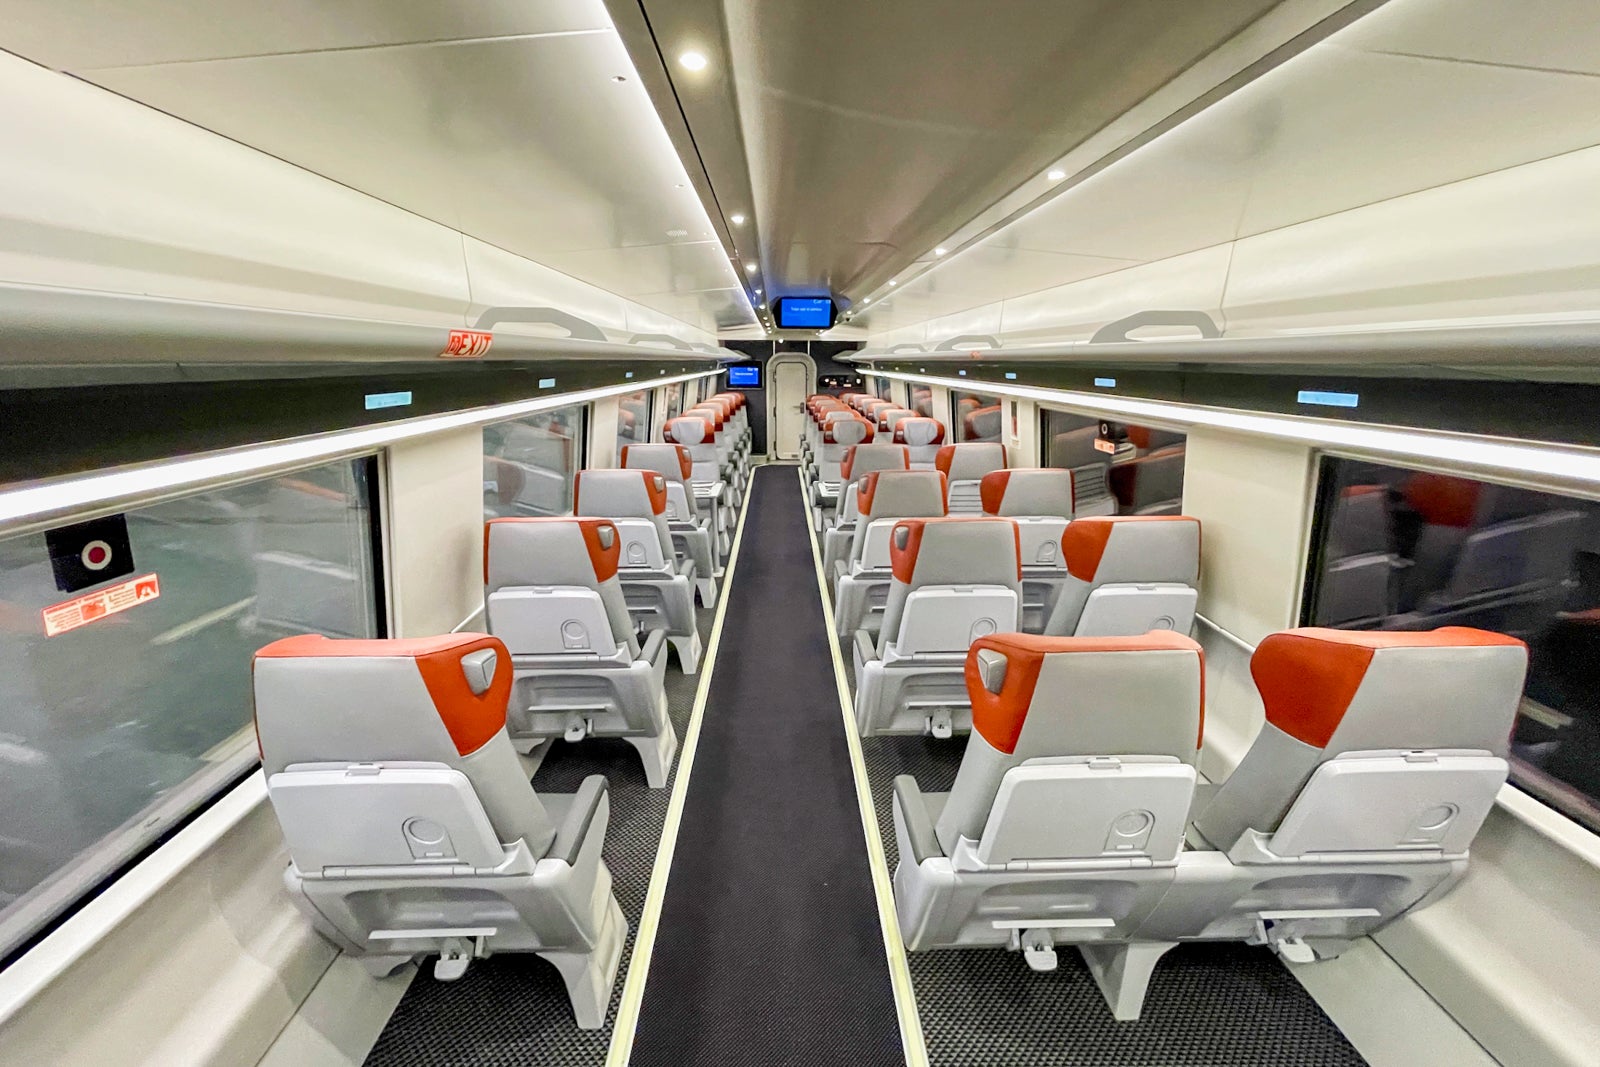 future of train travel